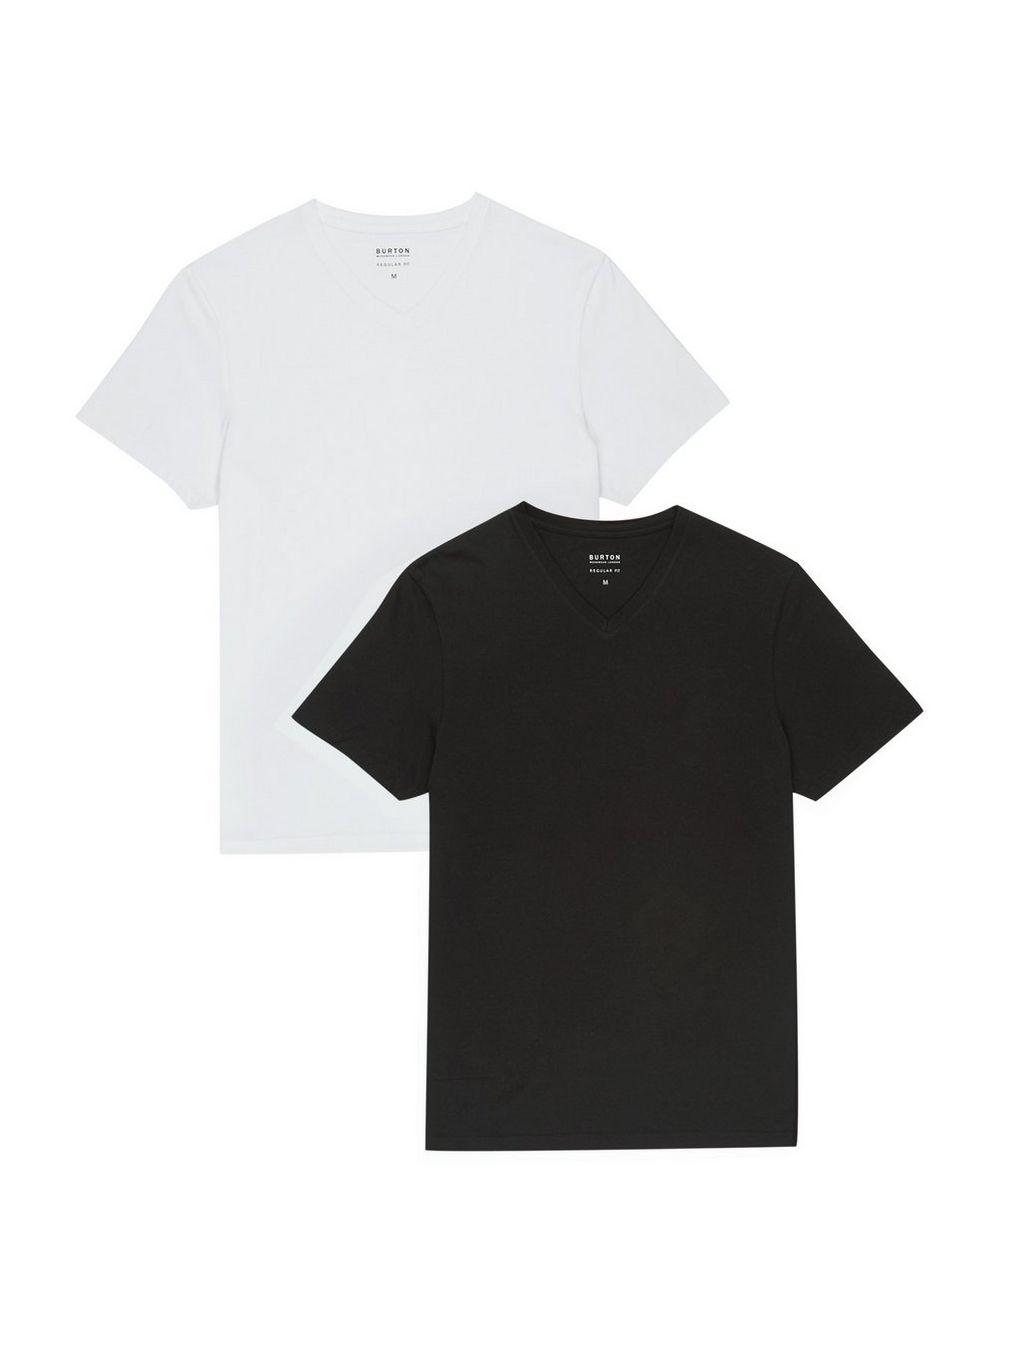 White V Logo - 2 Pack Black and White V-Neck T-Shirt - Burton Menswear